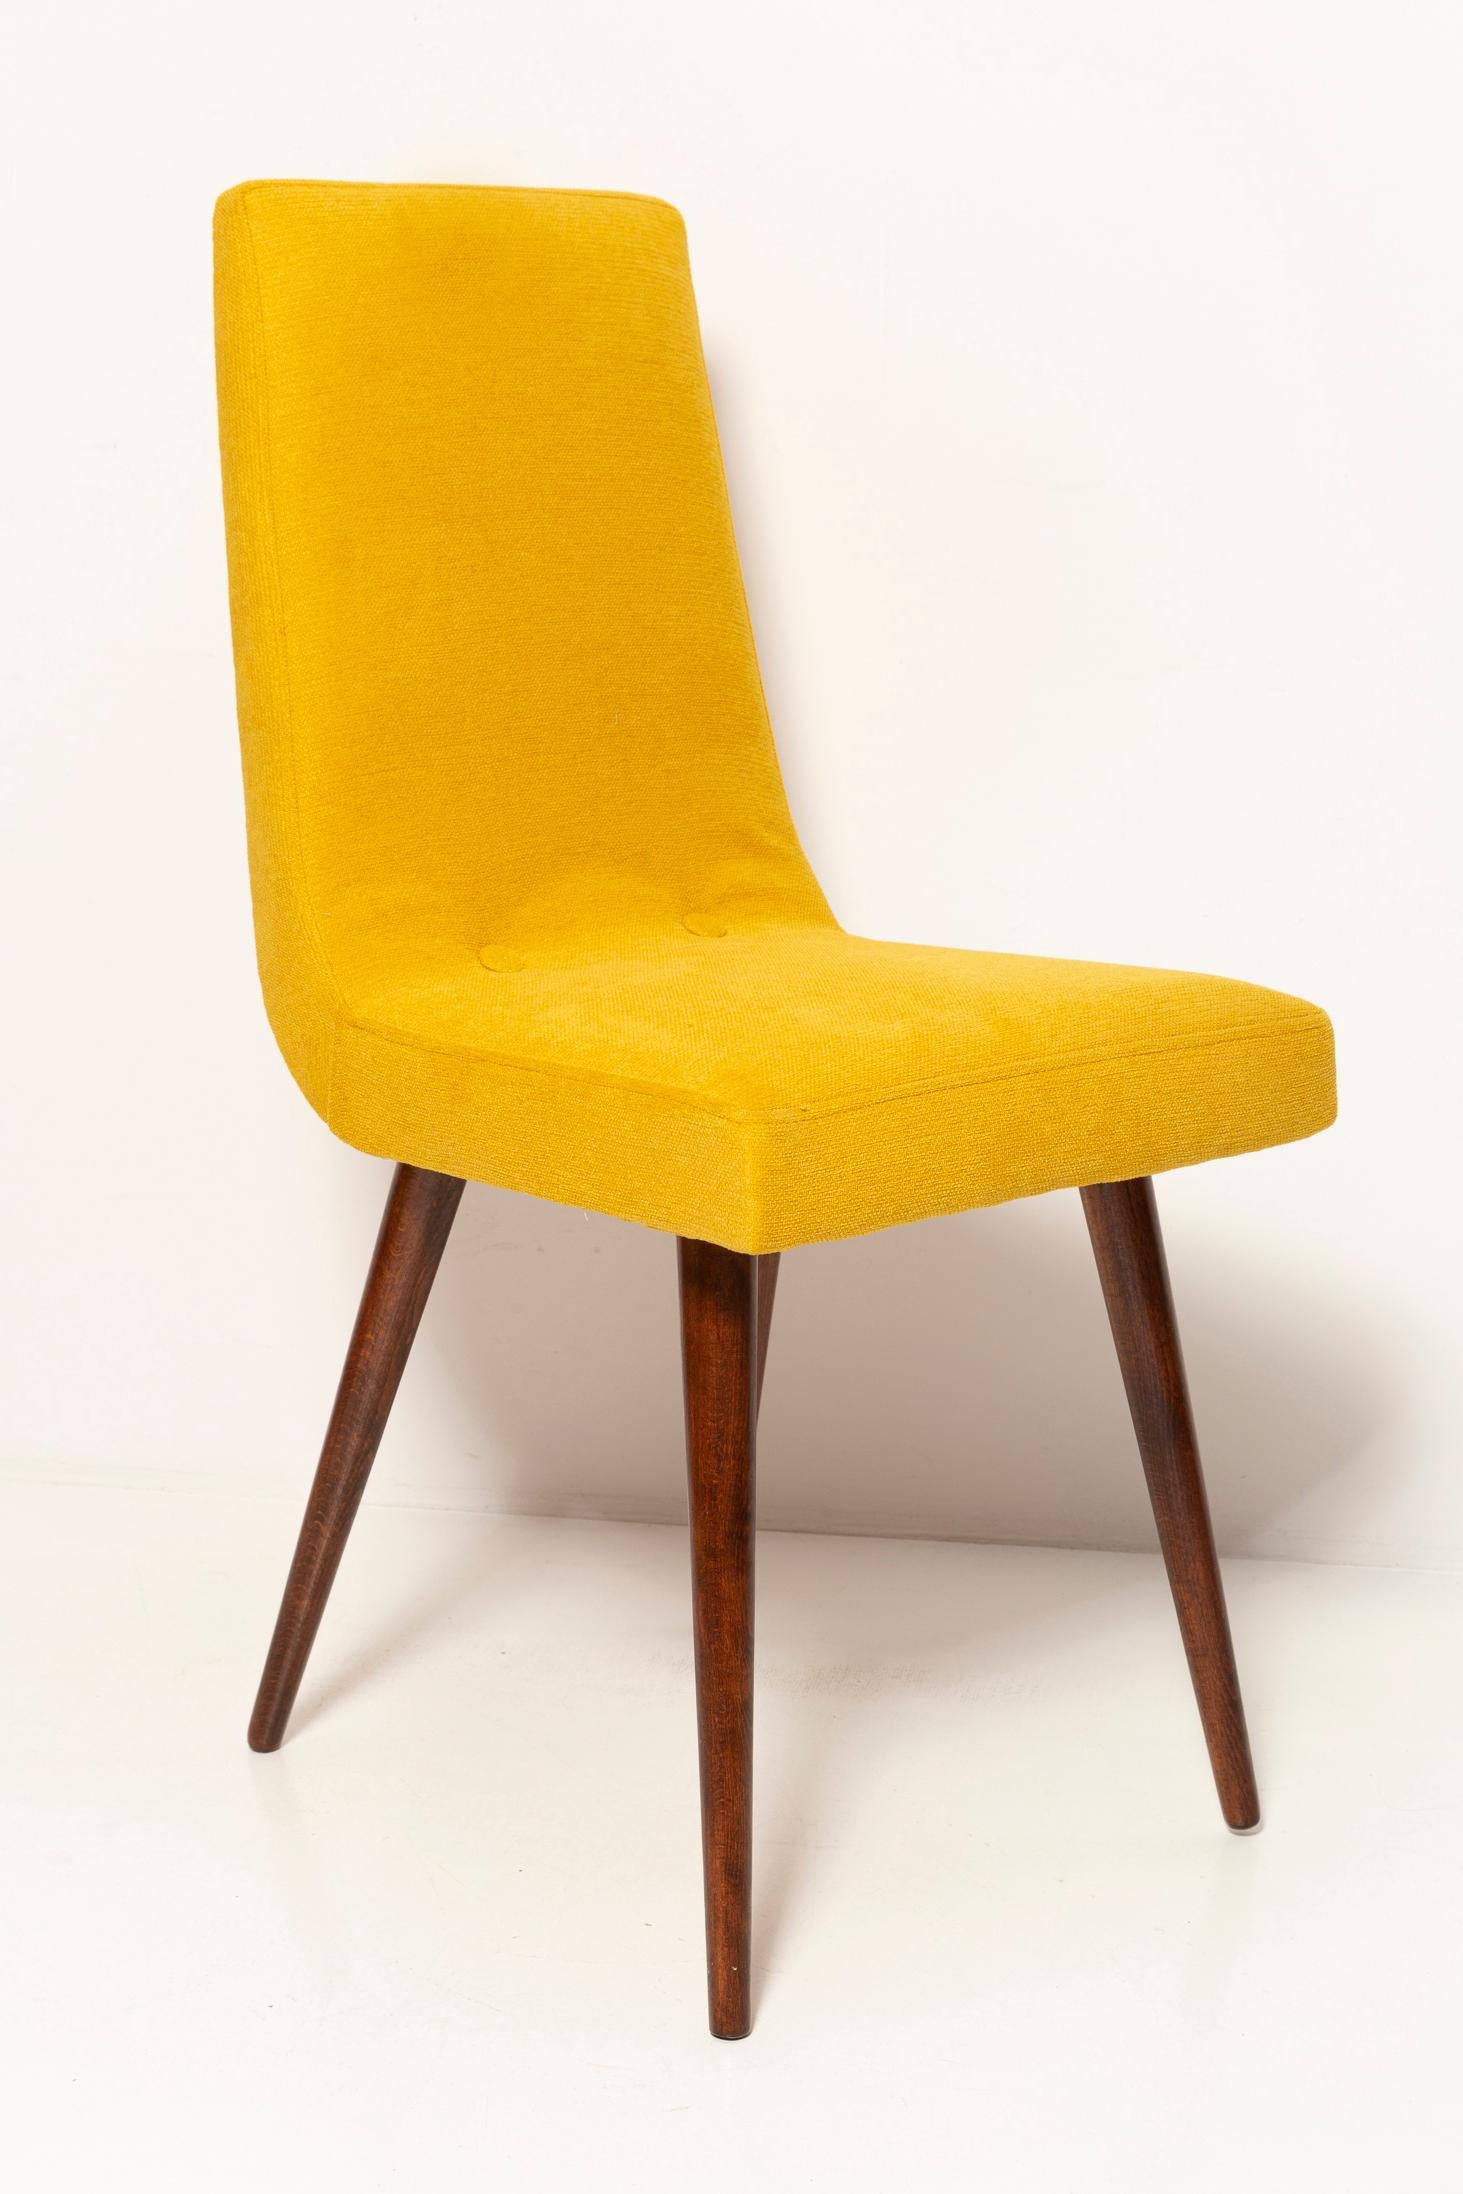 Midcentury Mustard Yellow Wool Chair, Rajmund Halas, Europe, 1960s For Sale 6